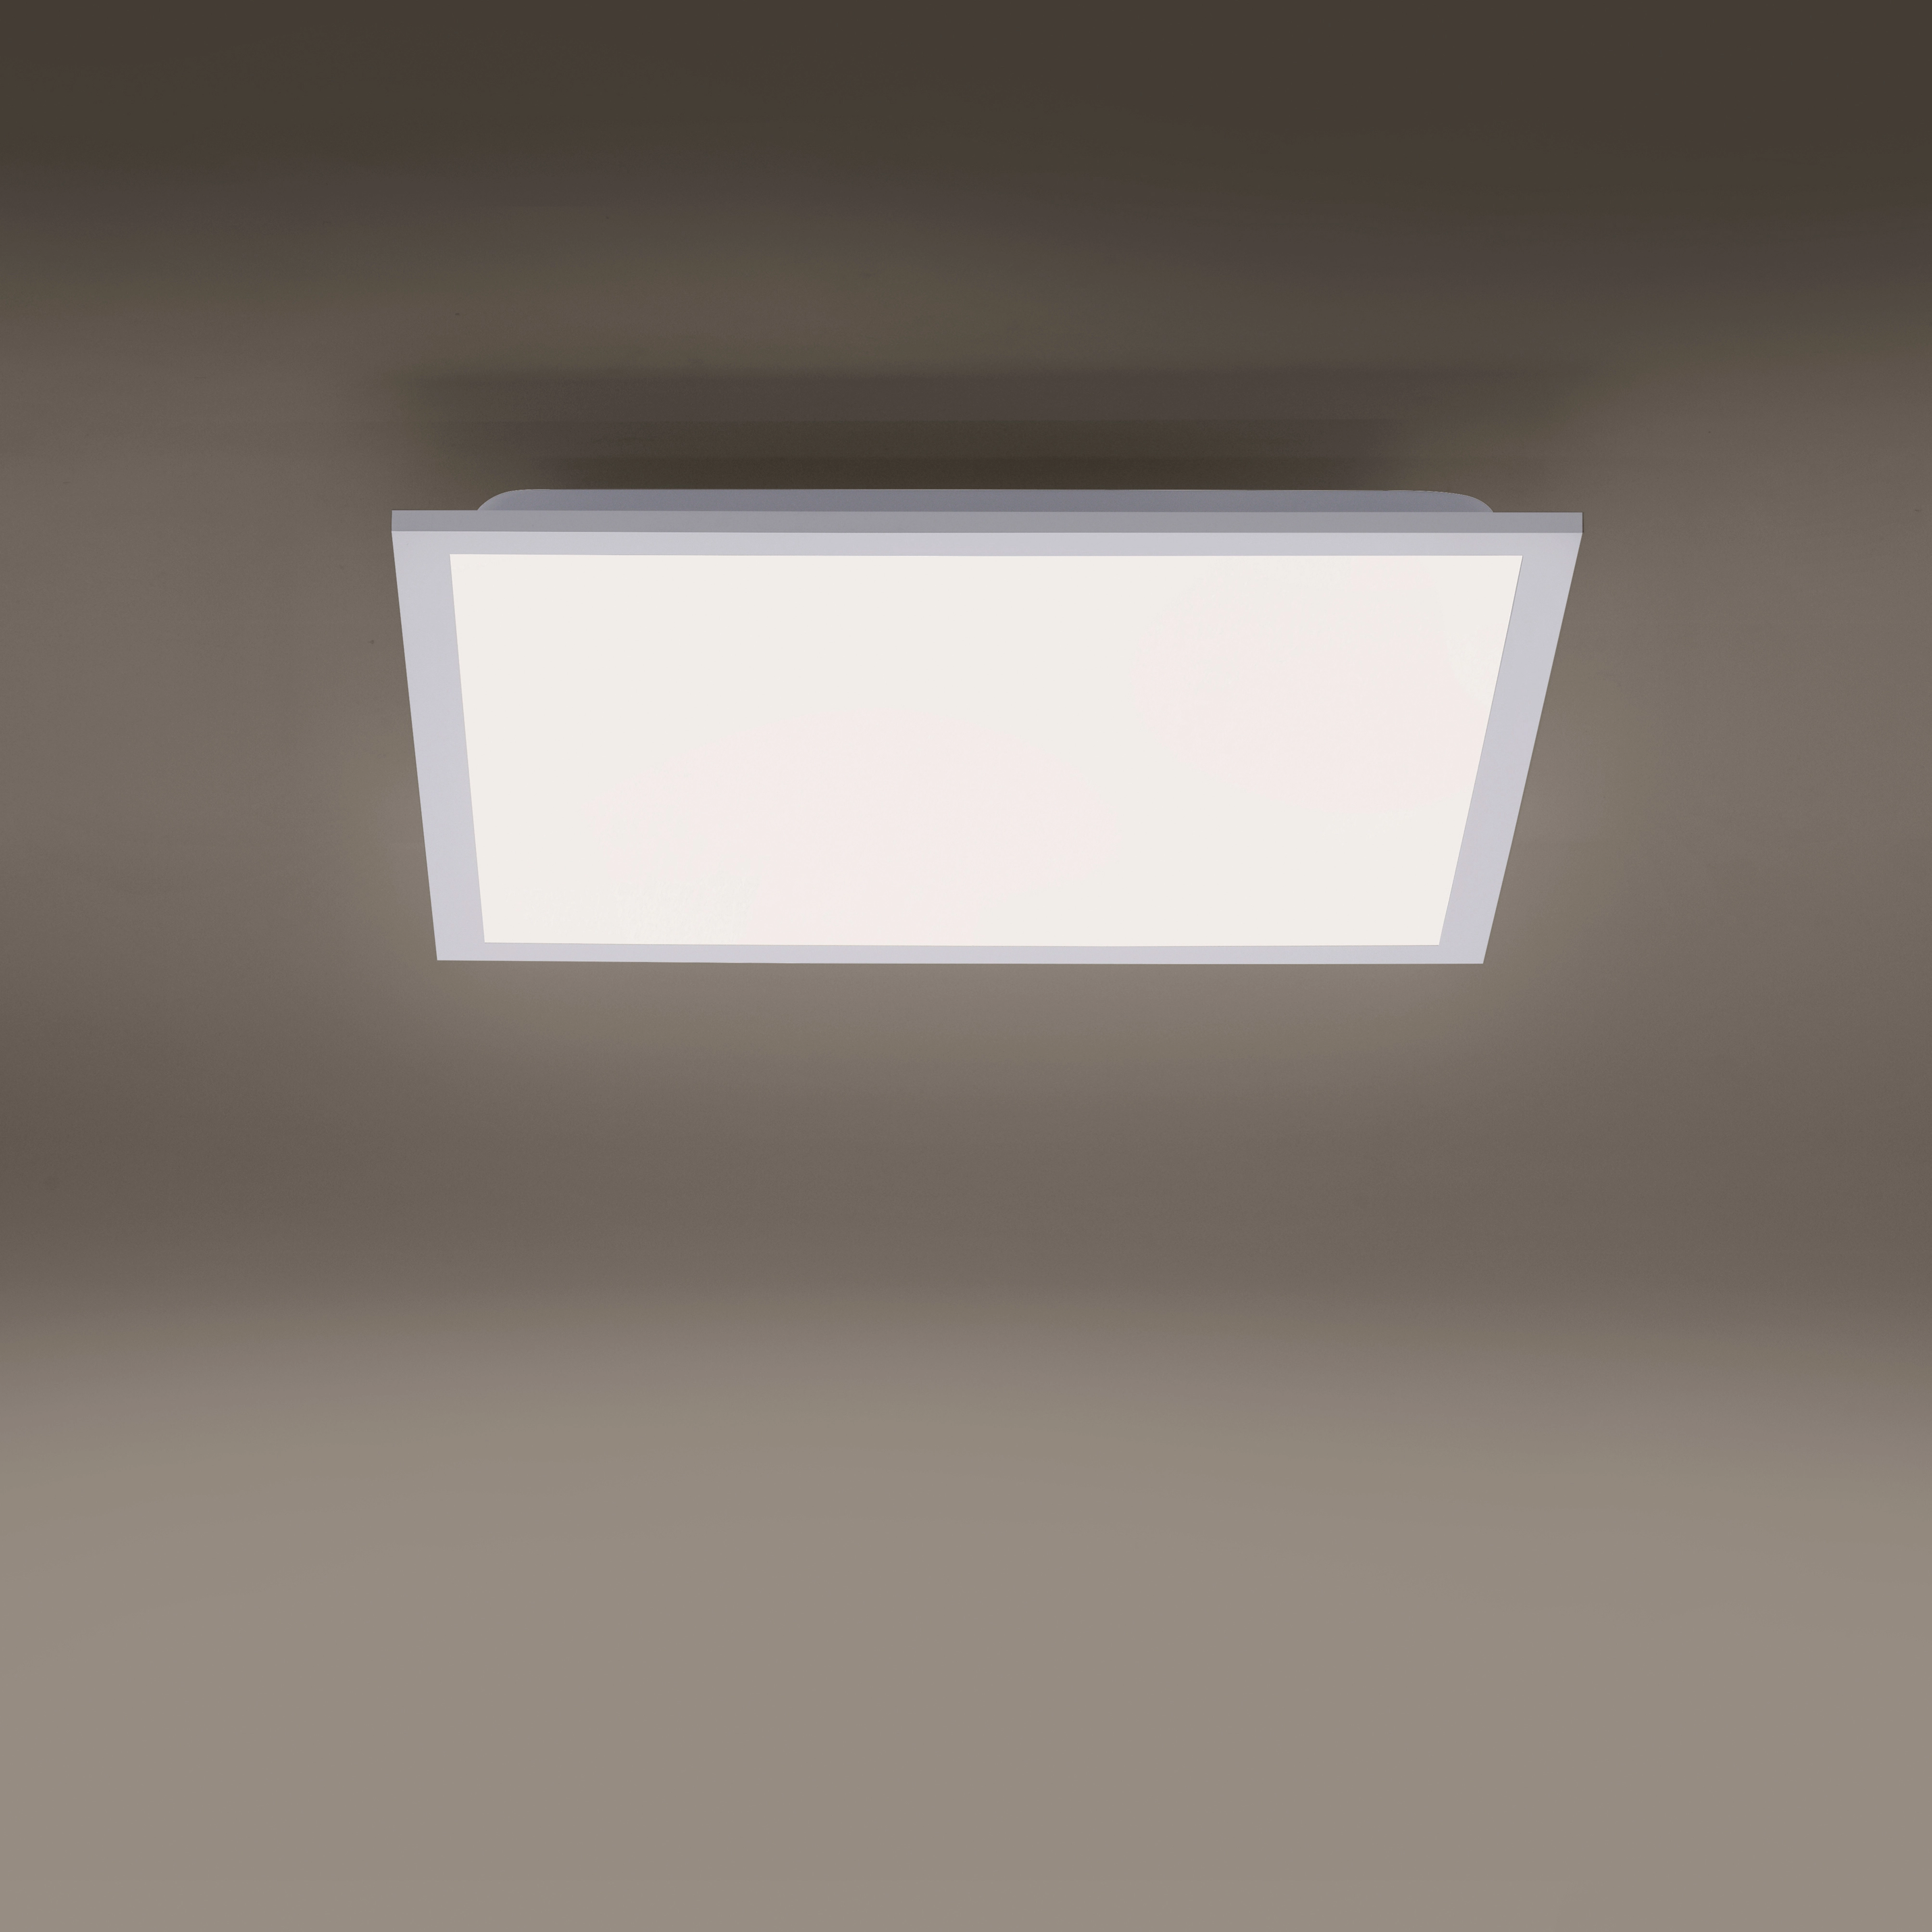 cm 44,5 LED-Deckenleuchte Fleet Weiß Light. Just x 44,5